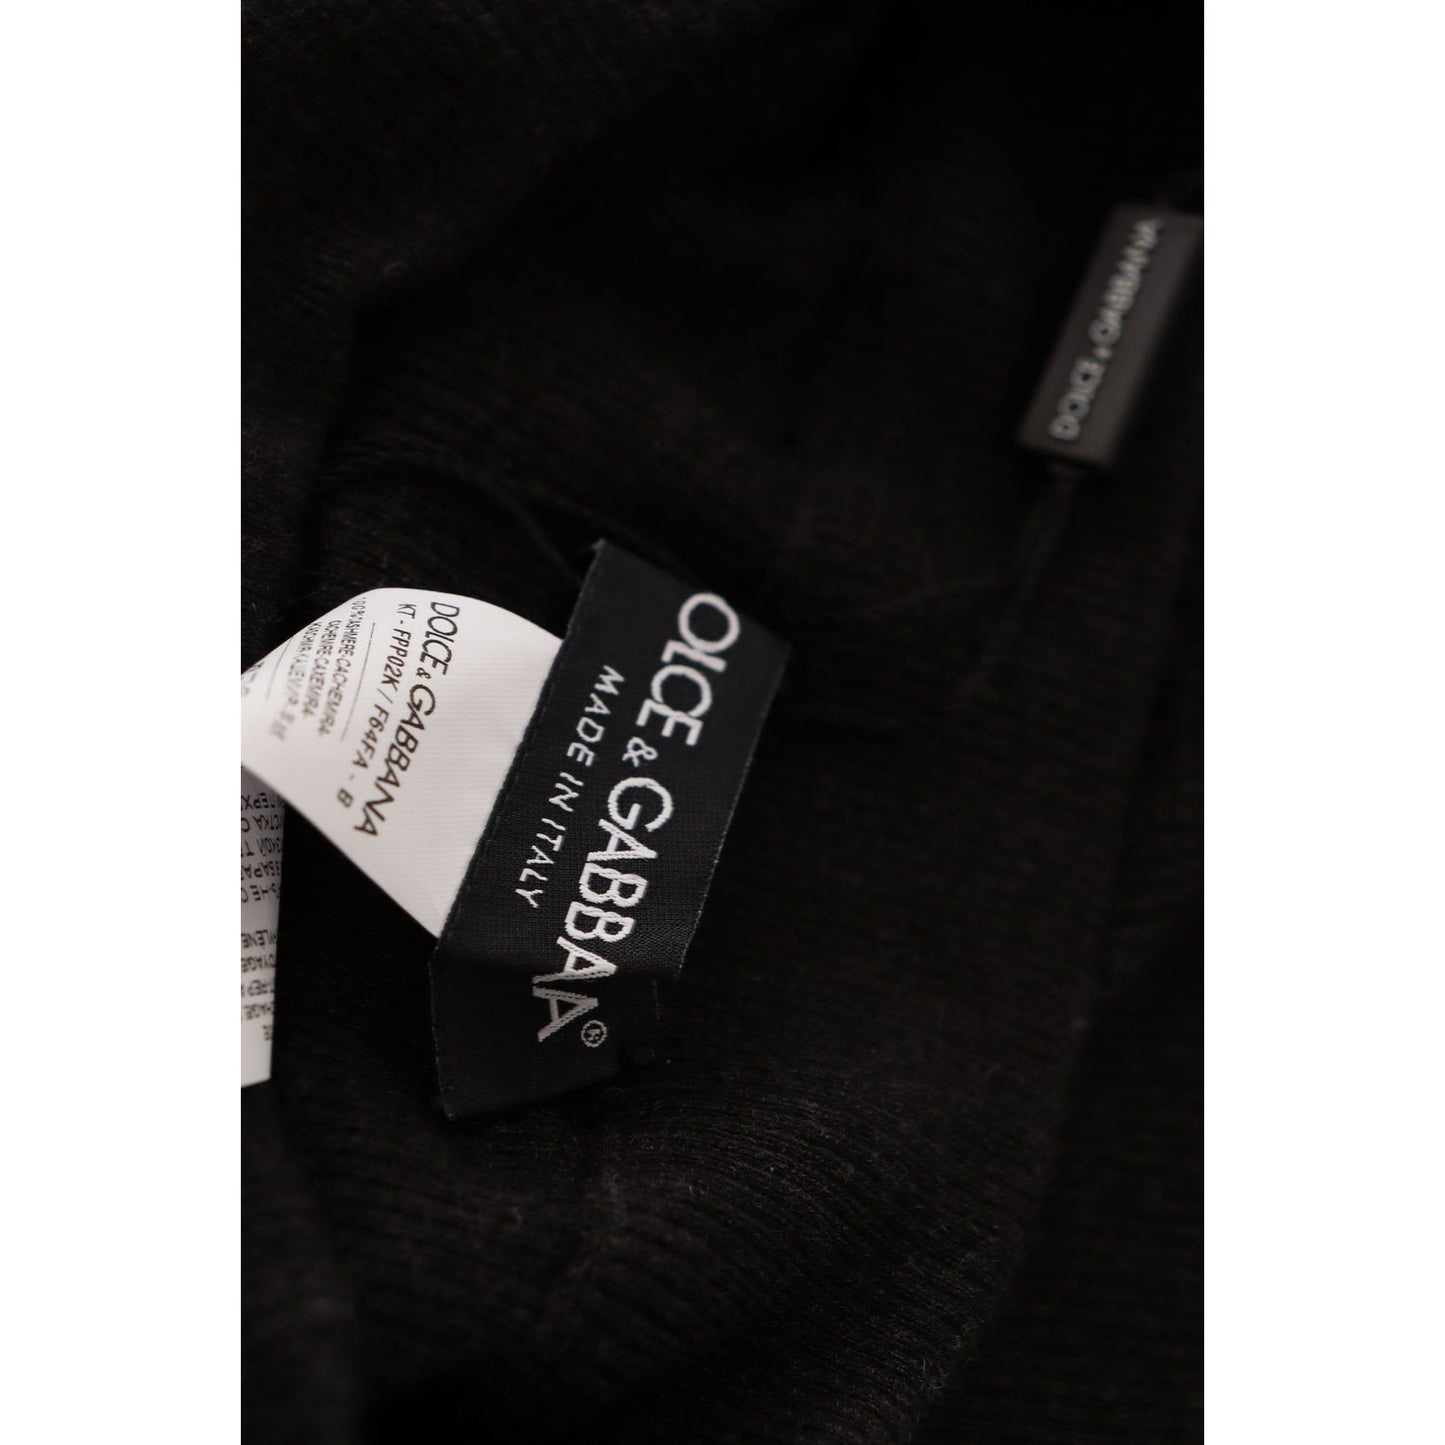 Dolce & Gabbana Elegant Cashmere Gray Tights | Winter Luxury WOMAN UNDERWEAR gray-cashmere-tights-stocking-pantyhose-socks